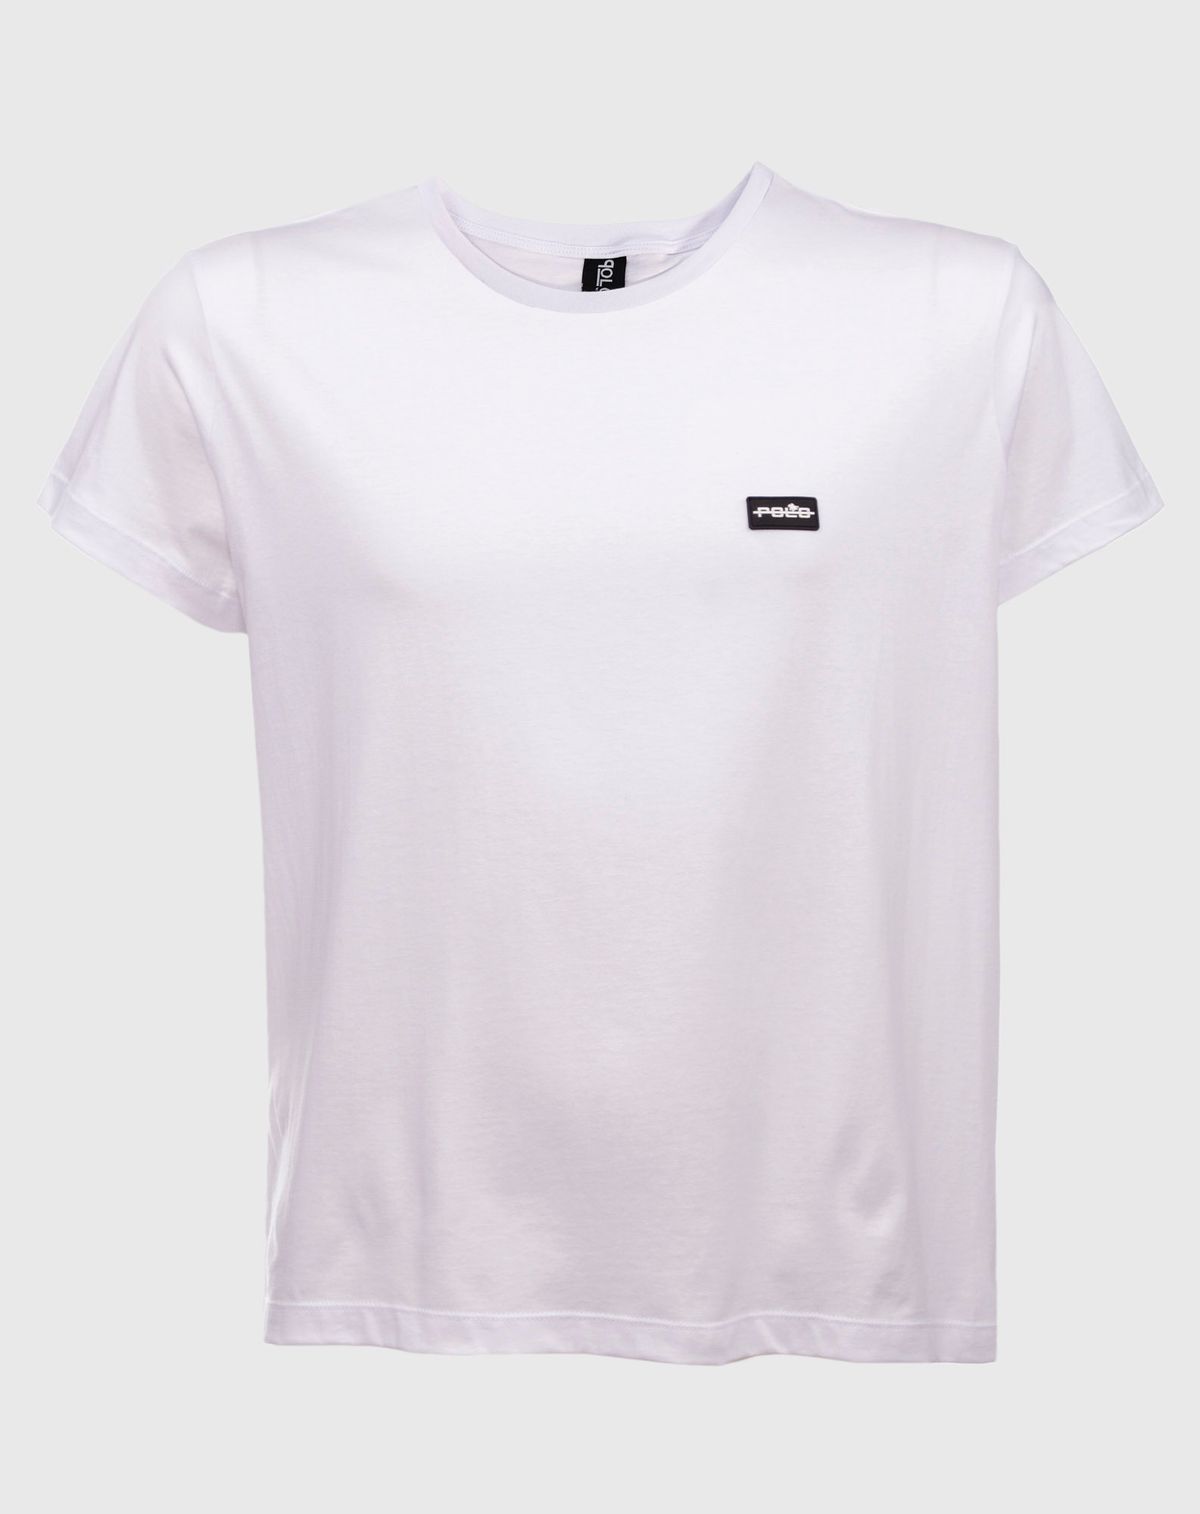 685039010-camiseta-plus-size-manga-curta-masculina-polo-basica-branco-g2-320